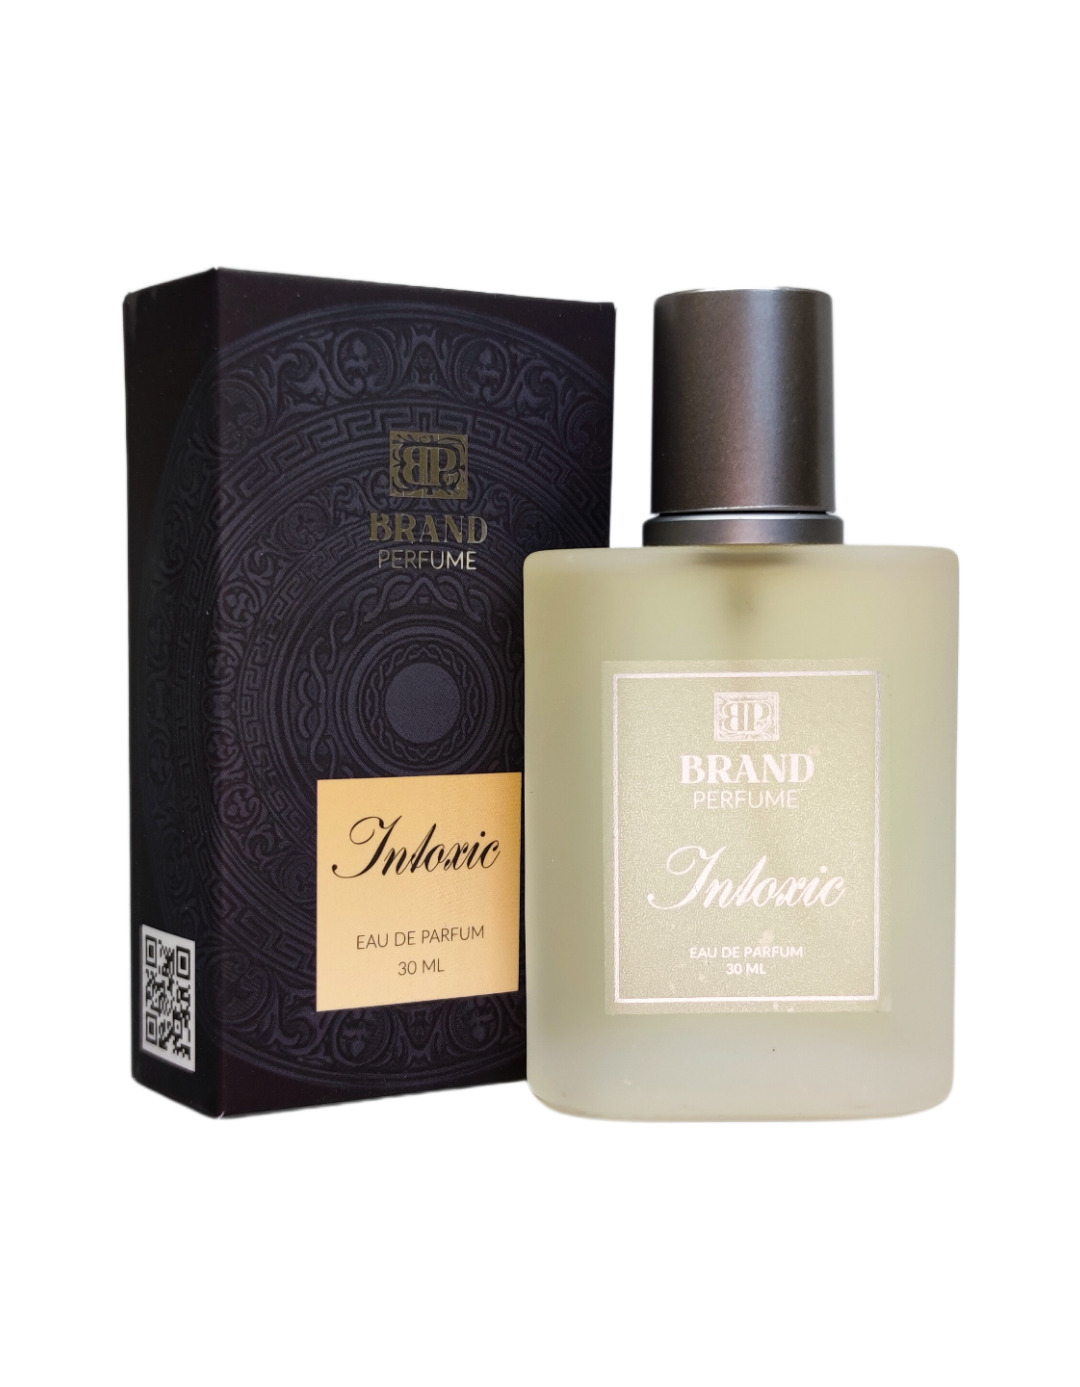 INTOXIC Eau De Parfum, Brand Perfume (Парфюмерная вода), спрей, 30 мл.